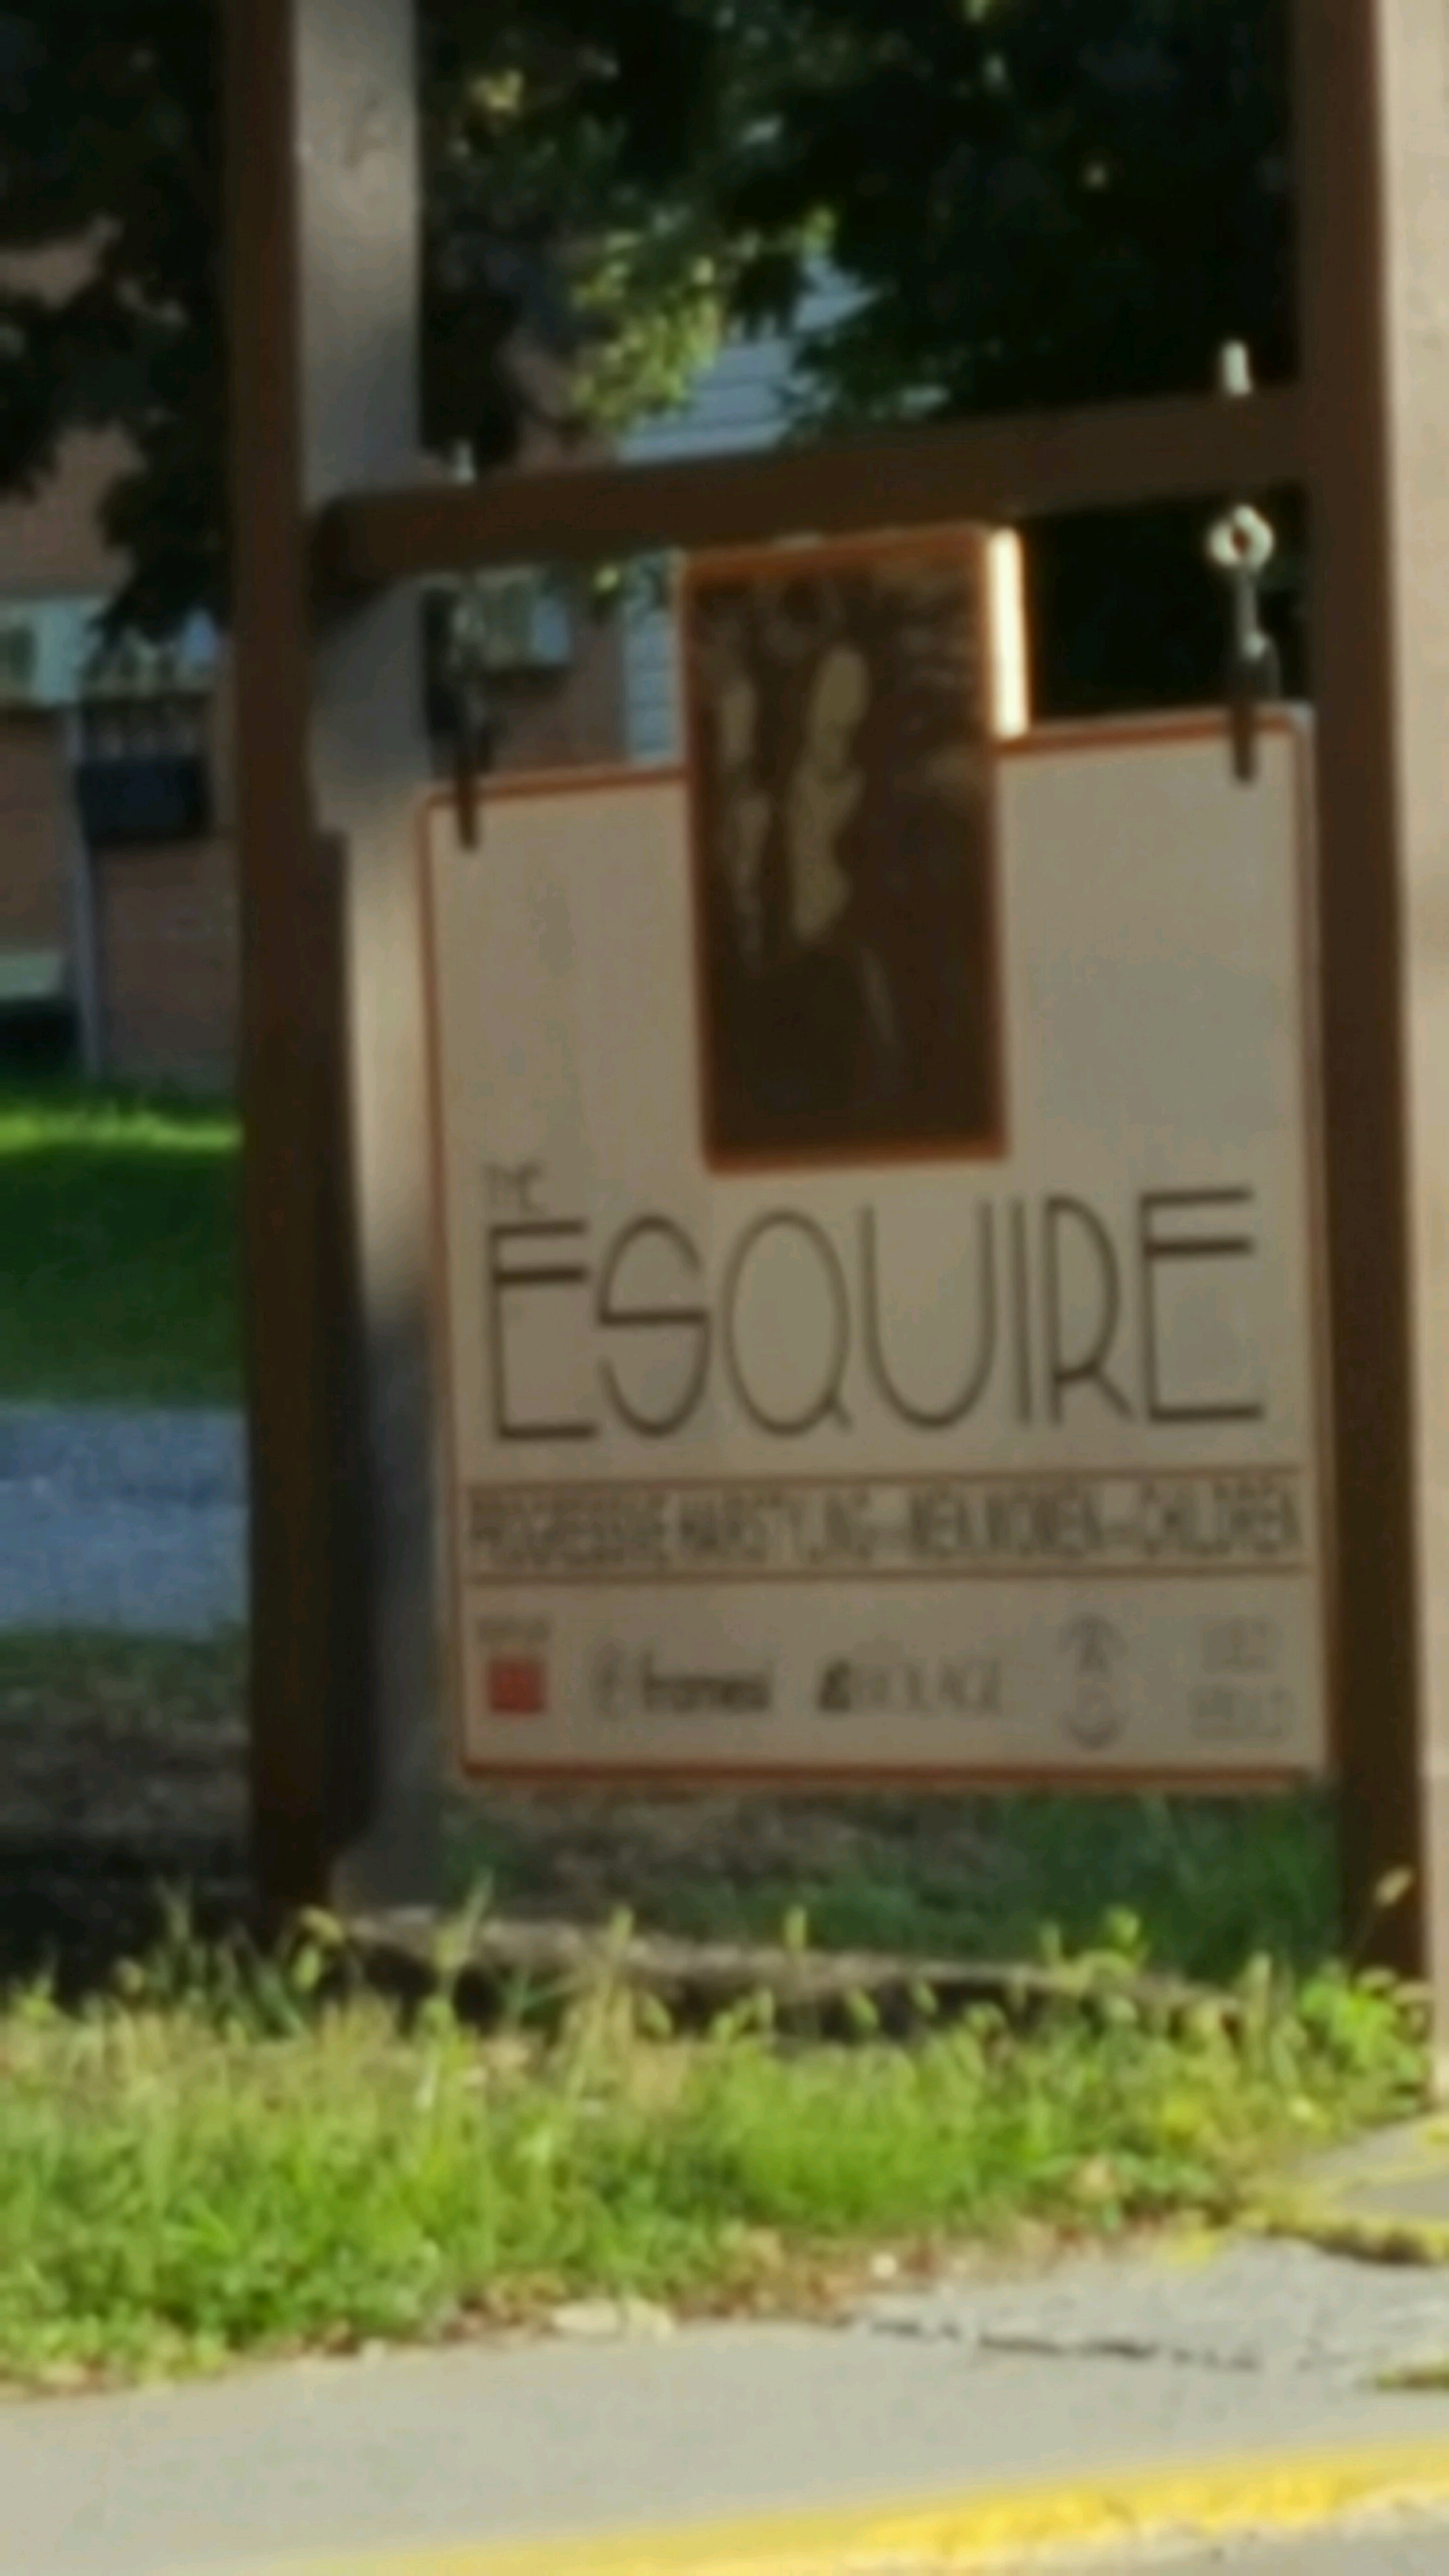 Esquire 440 West Main Street, White Sulphur Springs West Virginia 24986